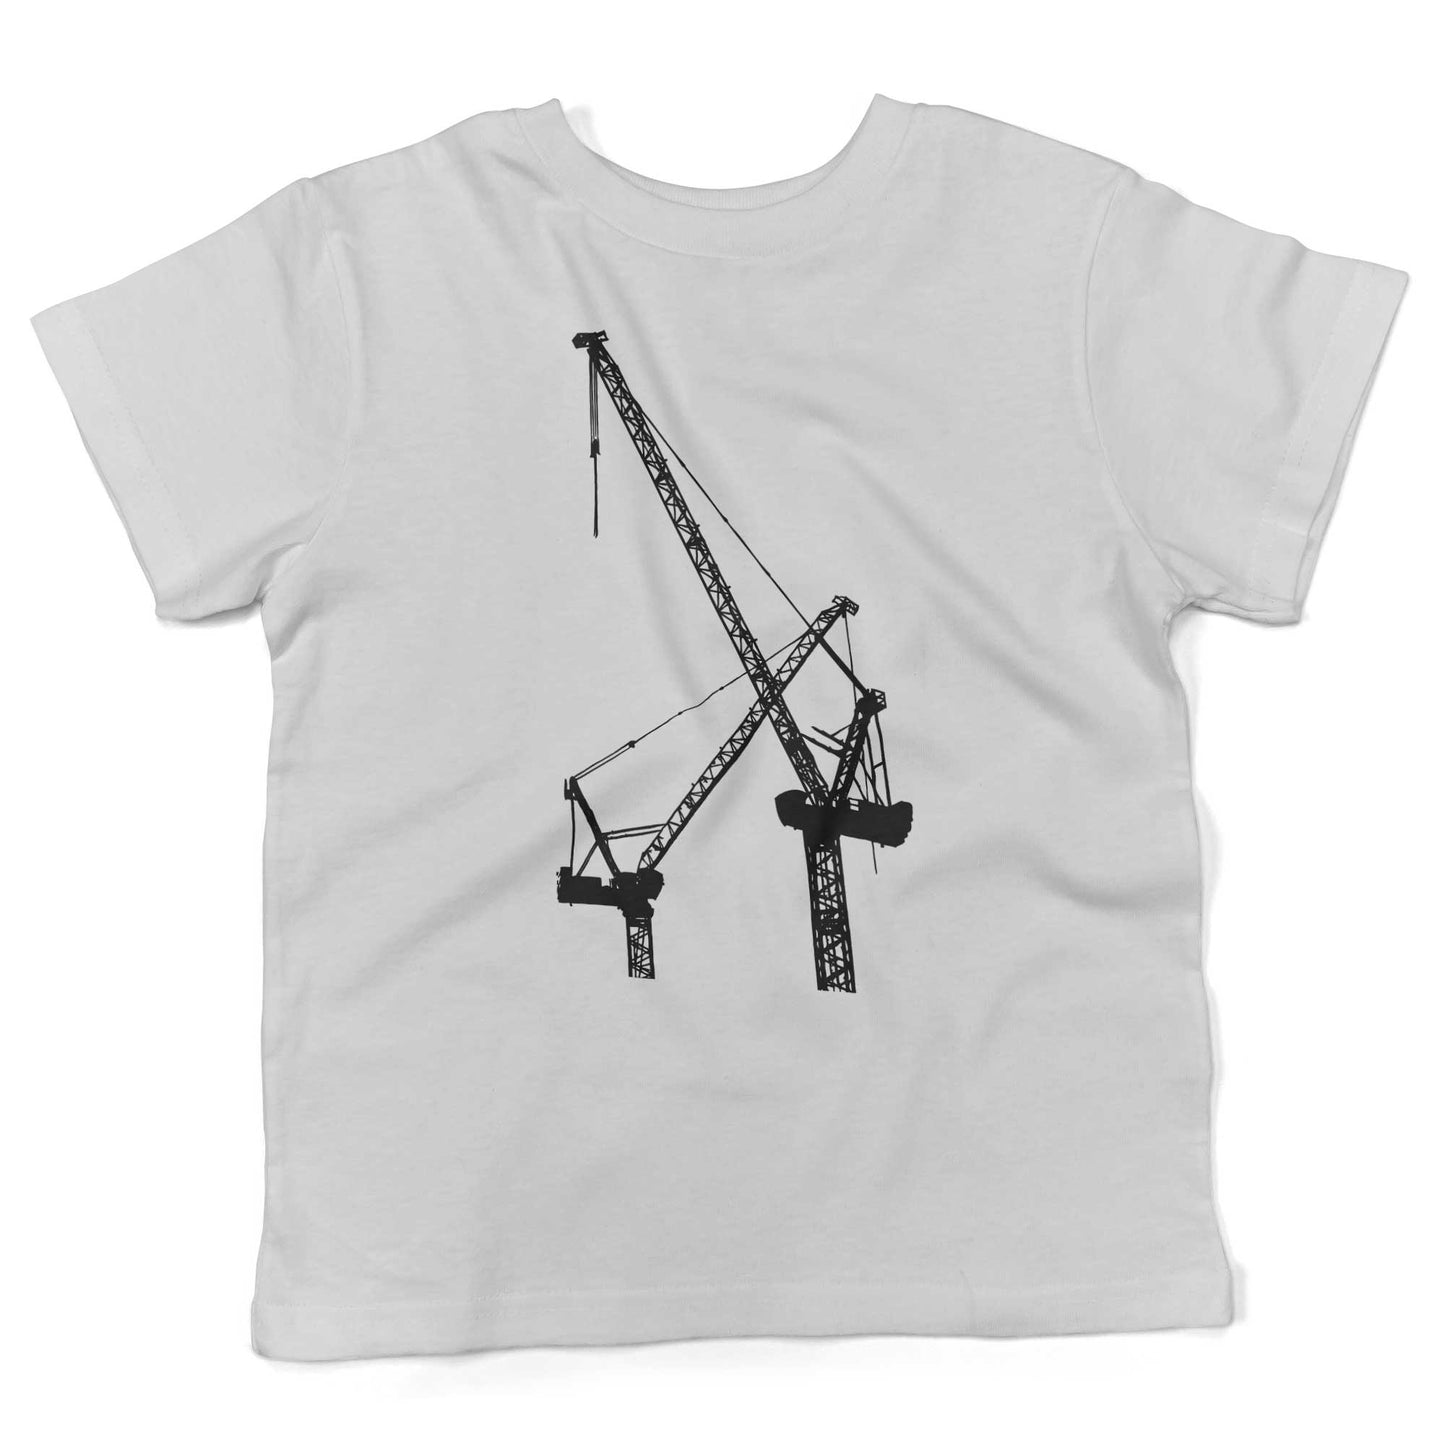 Construction Cranes Toddler Shirt-White-2T